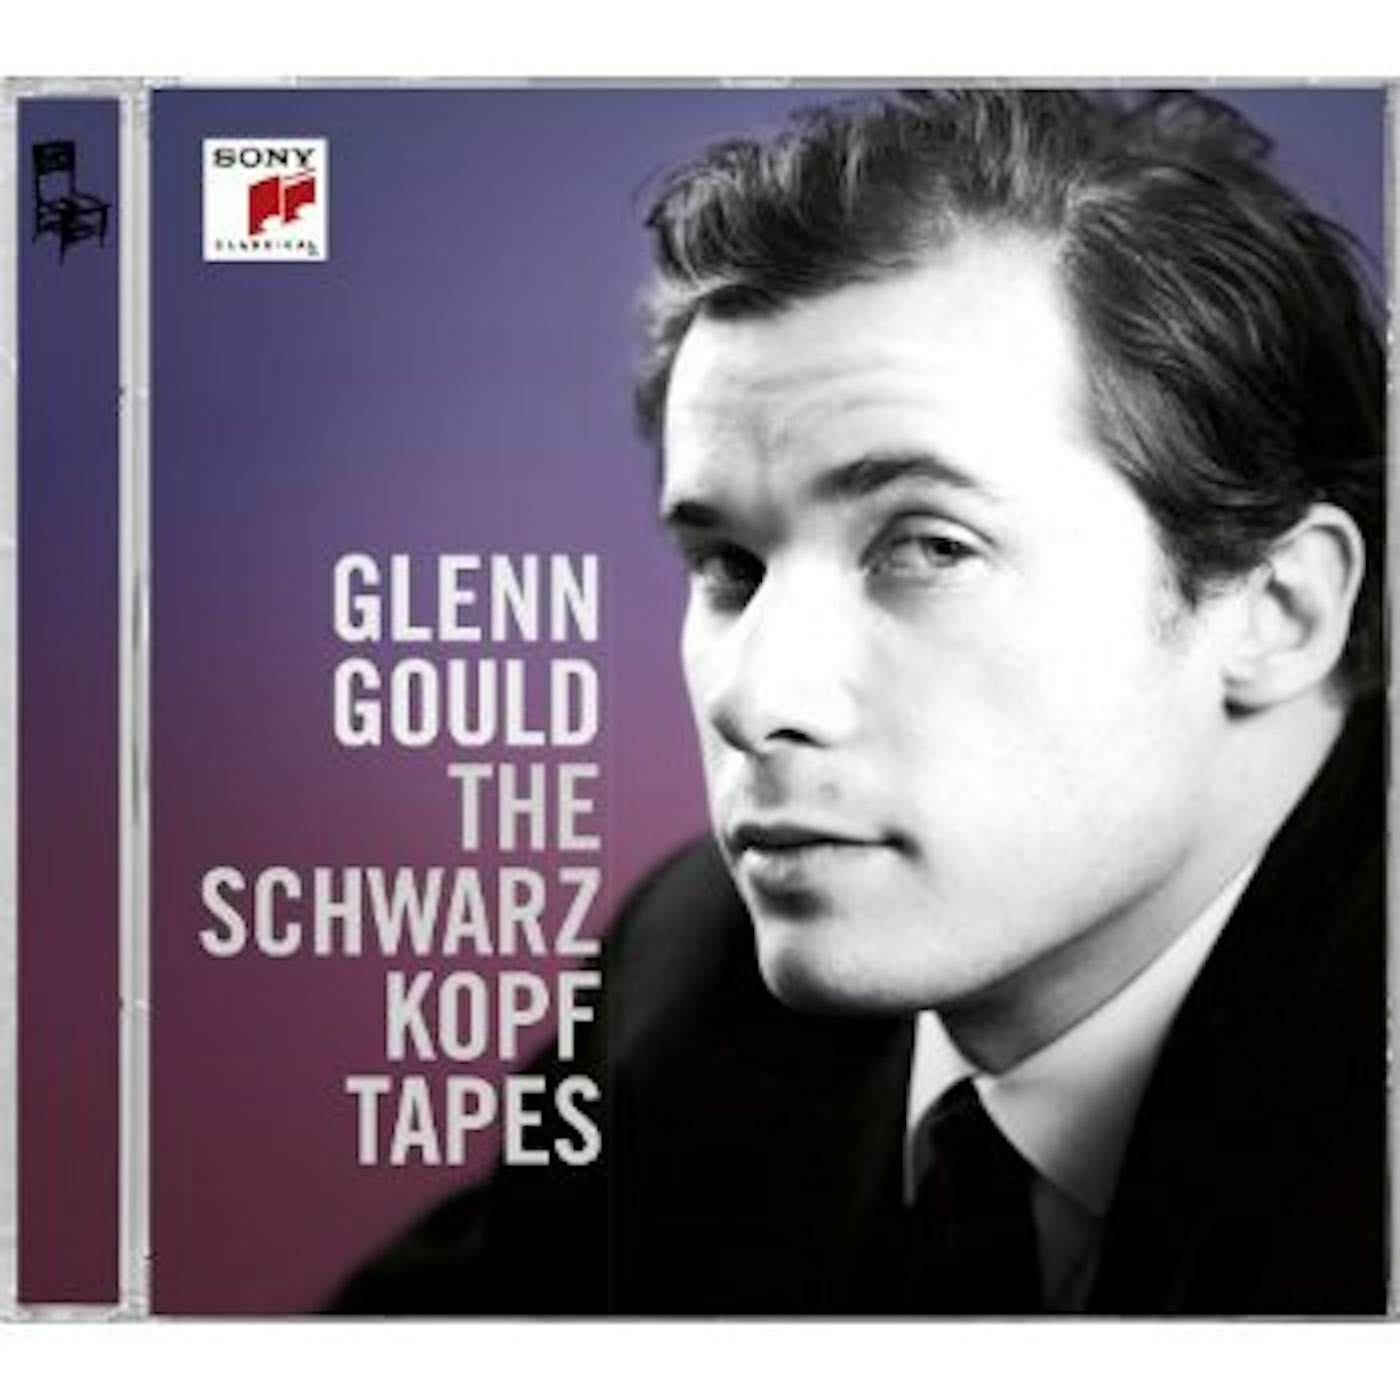 GLENN GOULD PLAYS STRAUSS CD